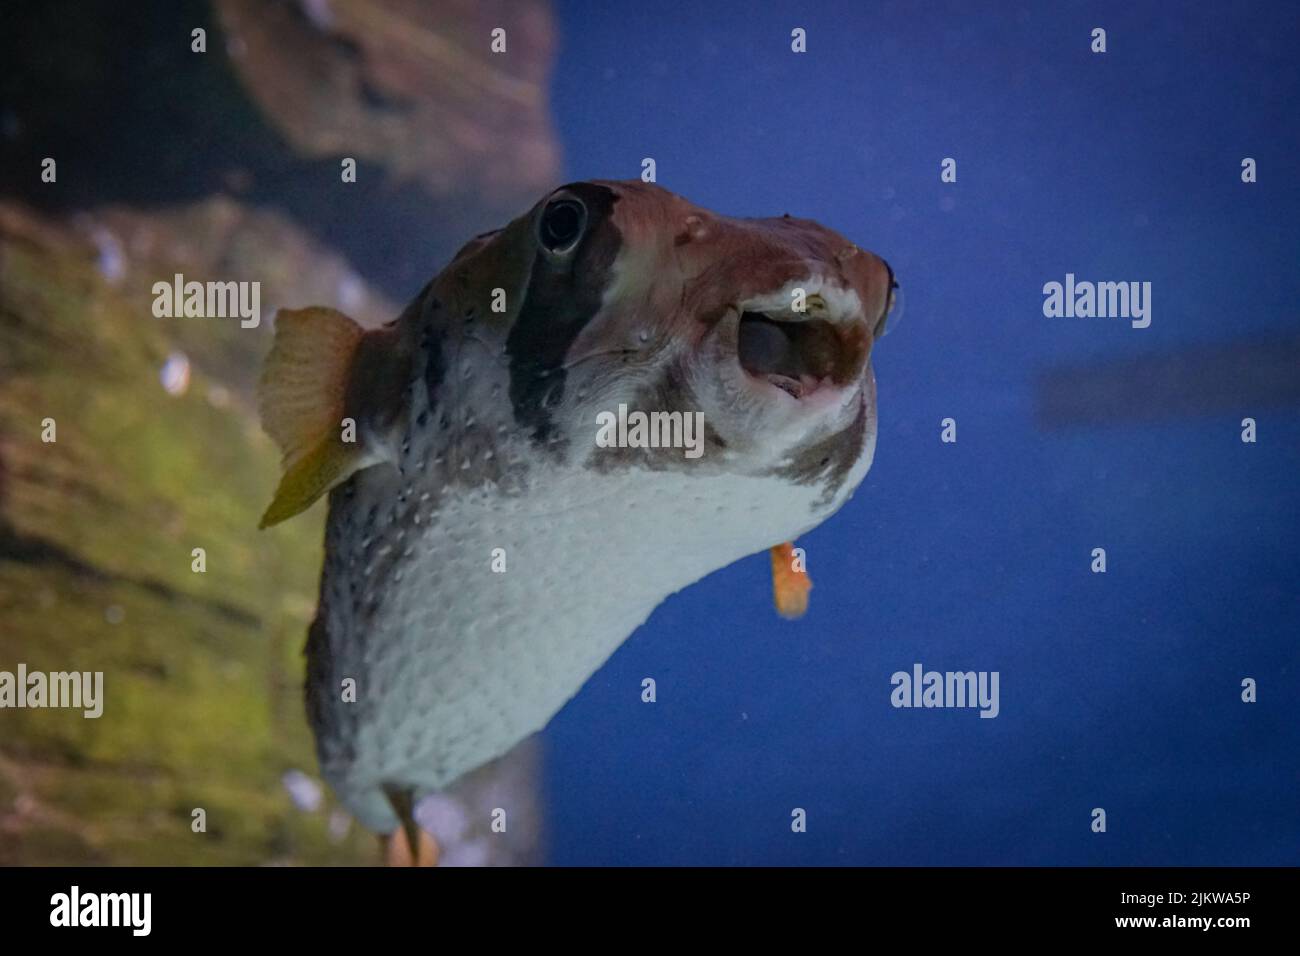 A closeup of a Diodon hystrix fish in the aquarium Stock Photo